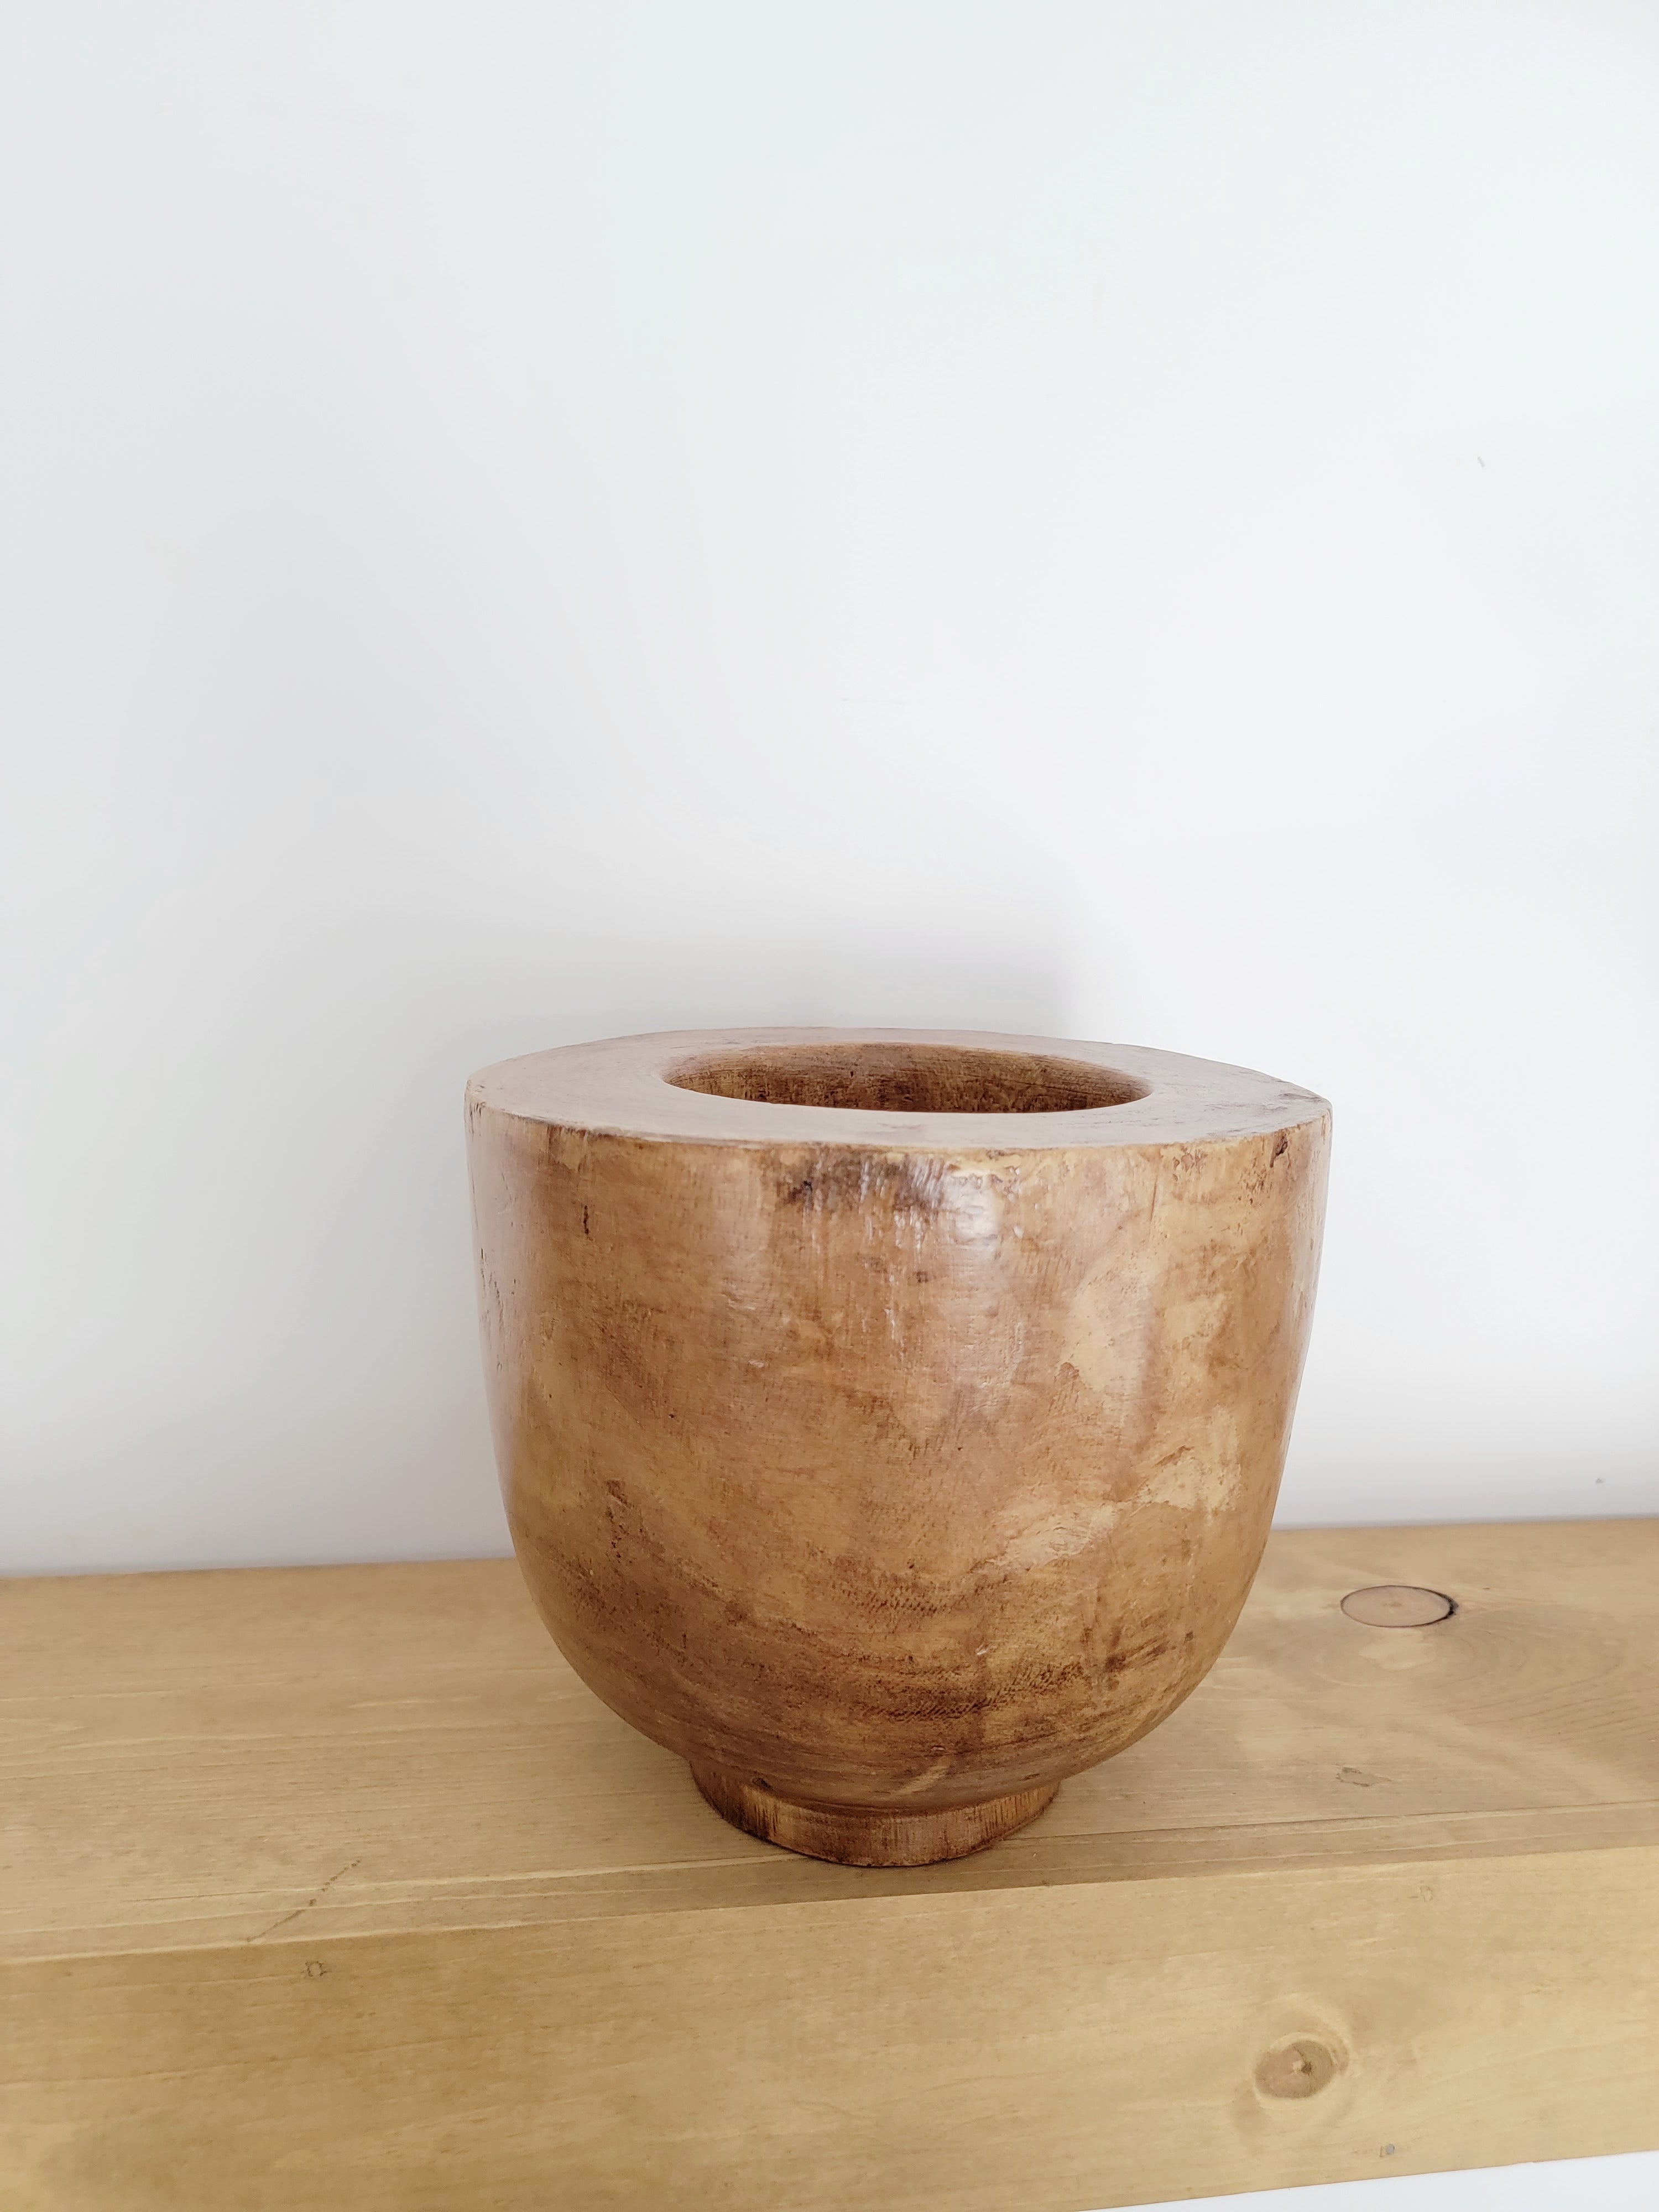 Decorative wood bowl